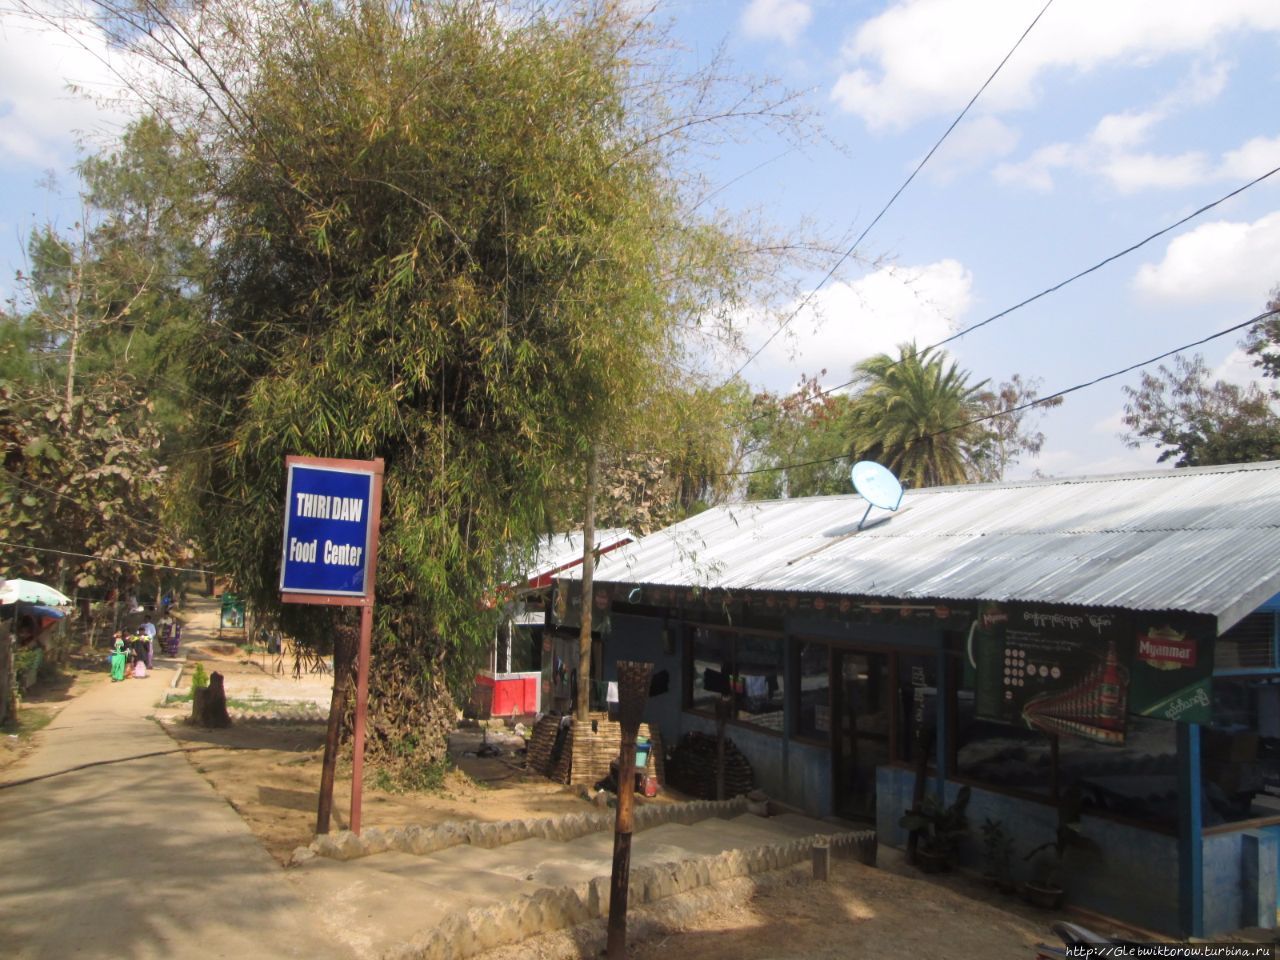 Thiri daw food centre Лойко, Мьянма